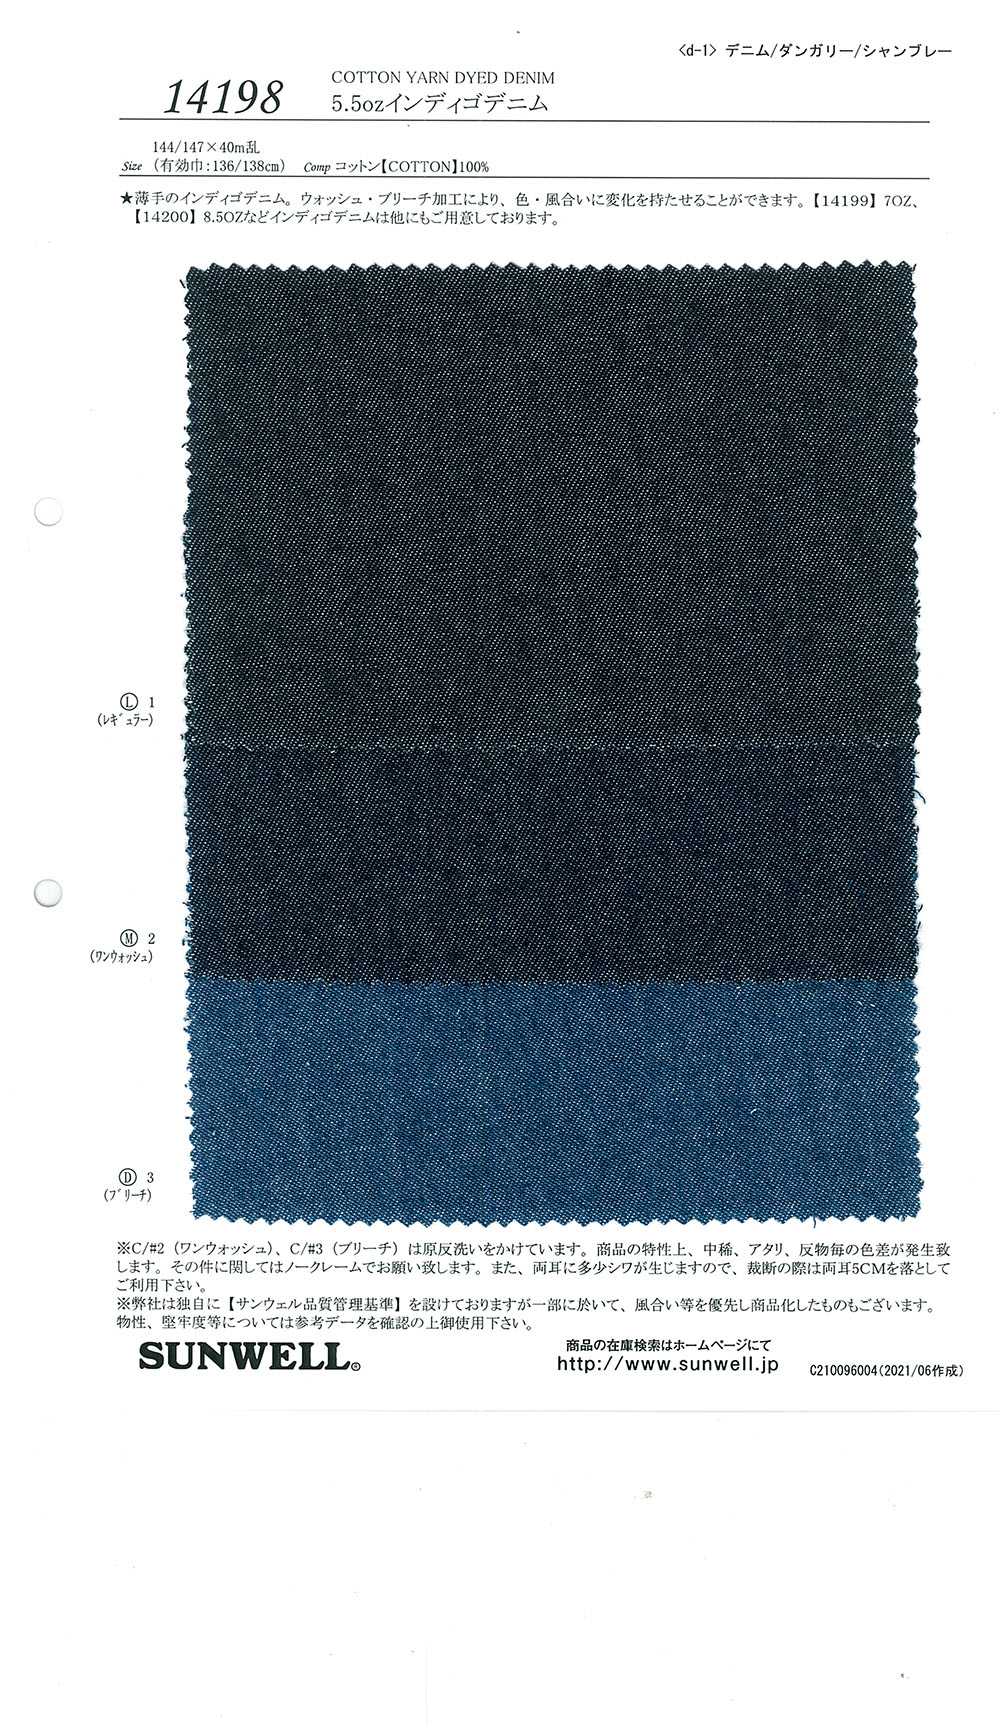 14198 Mezclilla índigo De 5.5 Oz[Fabrica Textil] SUNWELL